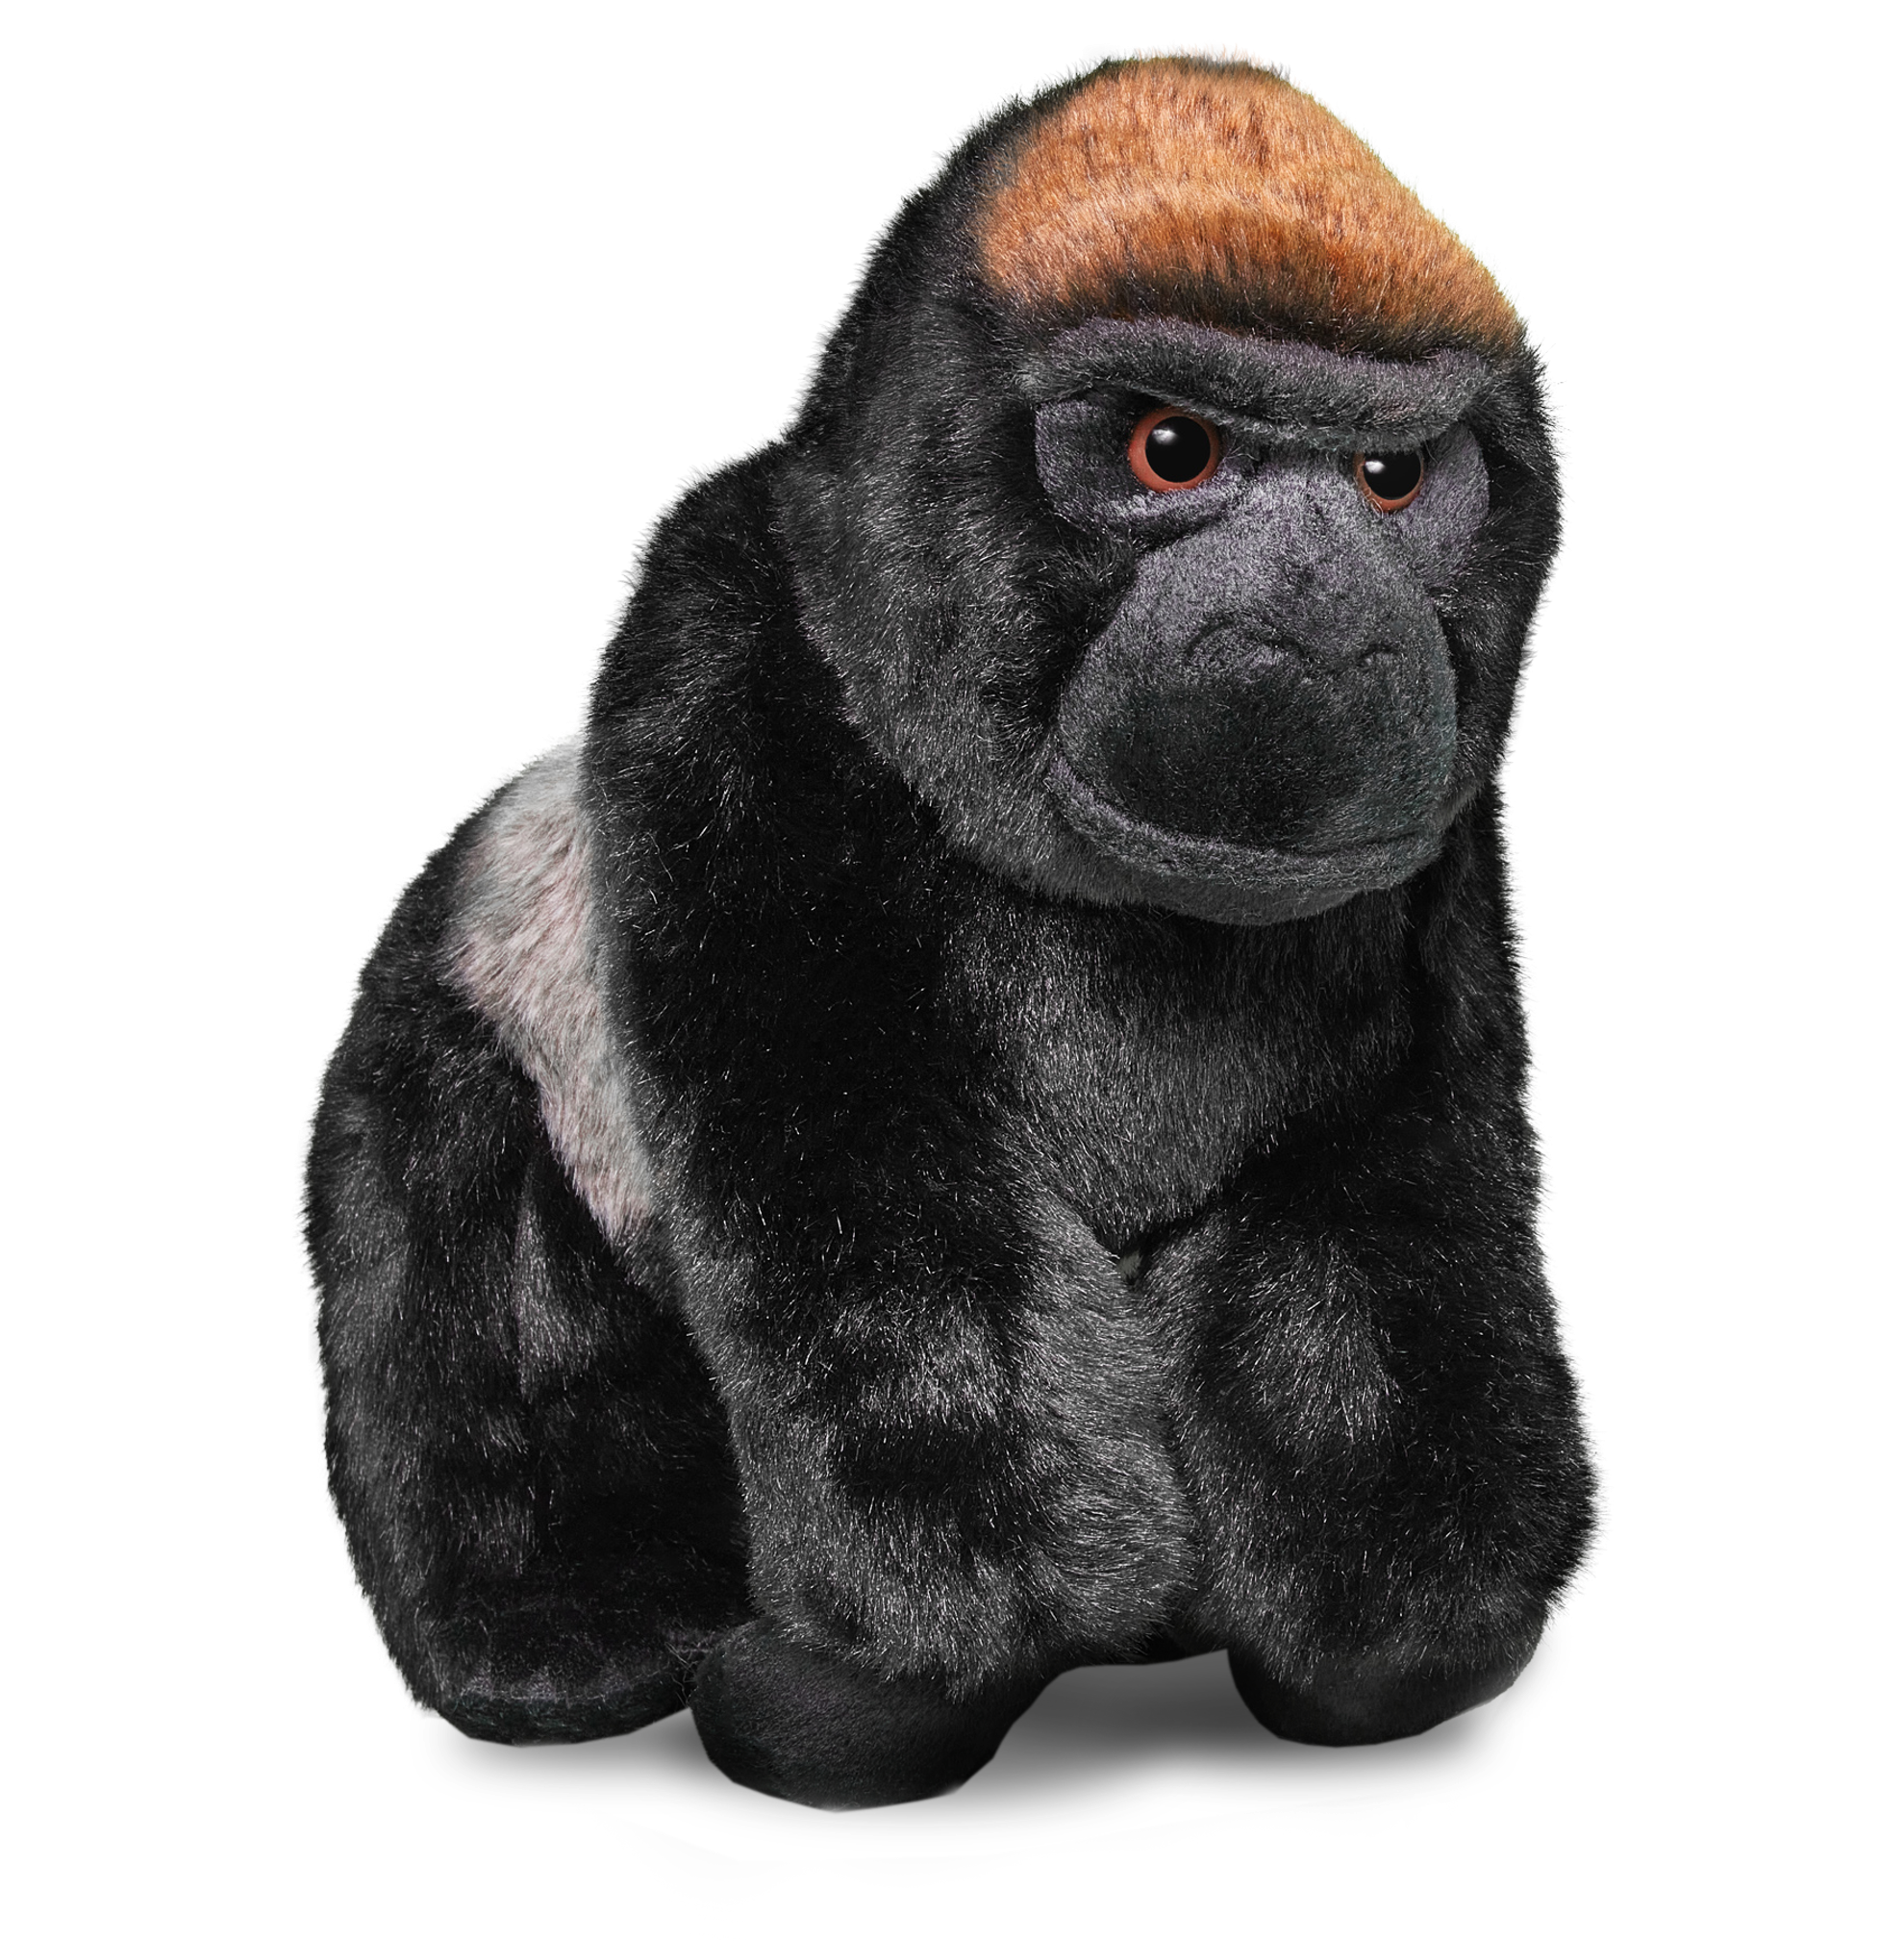 Gorilla - WWF-Canada